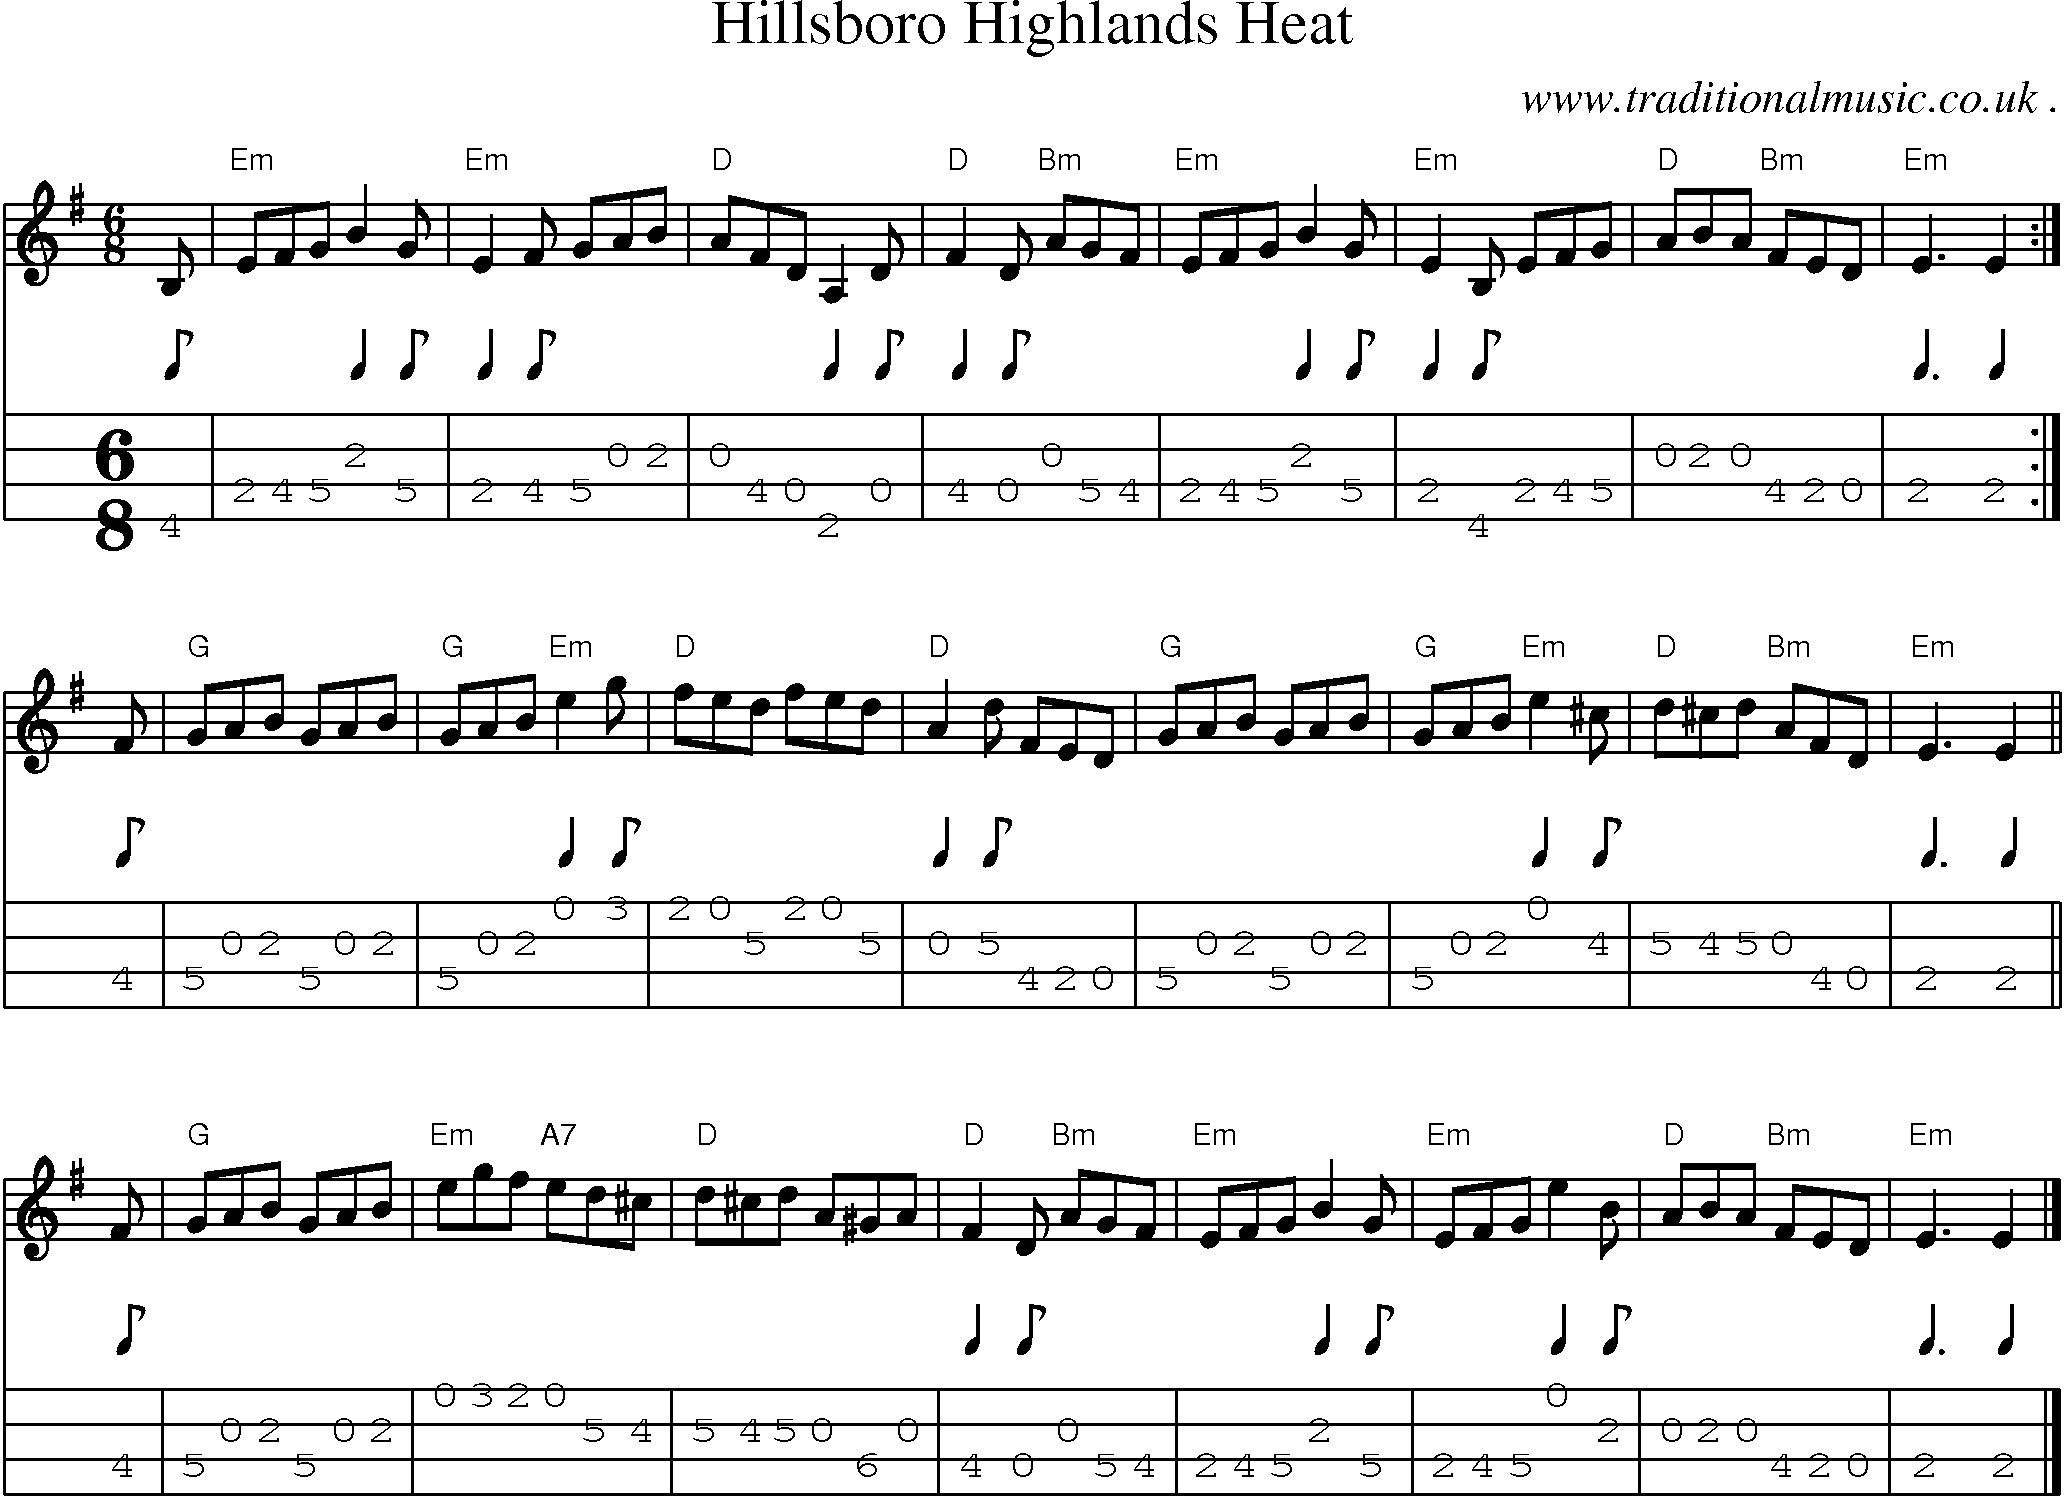 Sheet-music  score, Chords and Mandolin Tabs for Hillsboro Highlands Heat